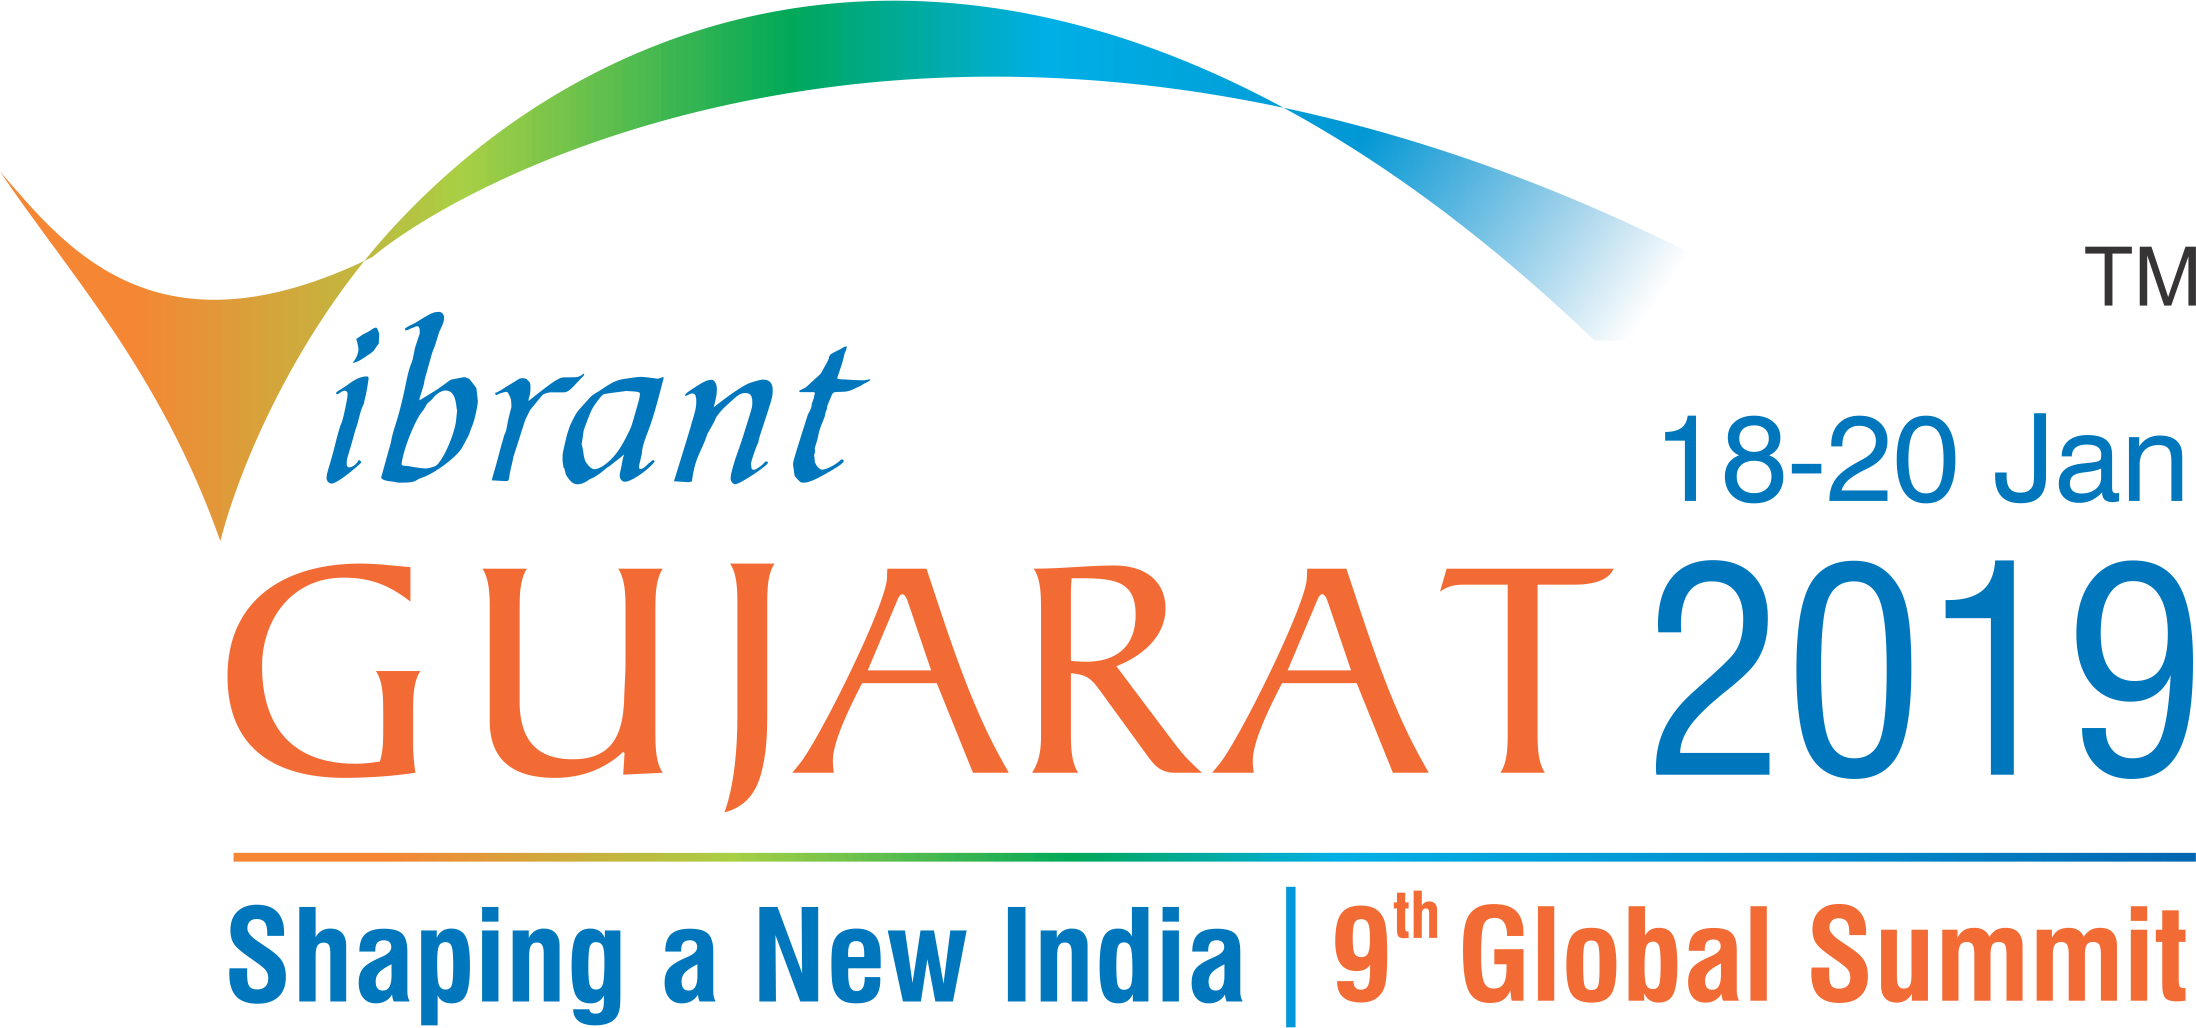 Vibrant Gujarat - External website that opens in a new window